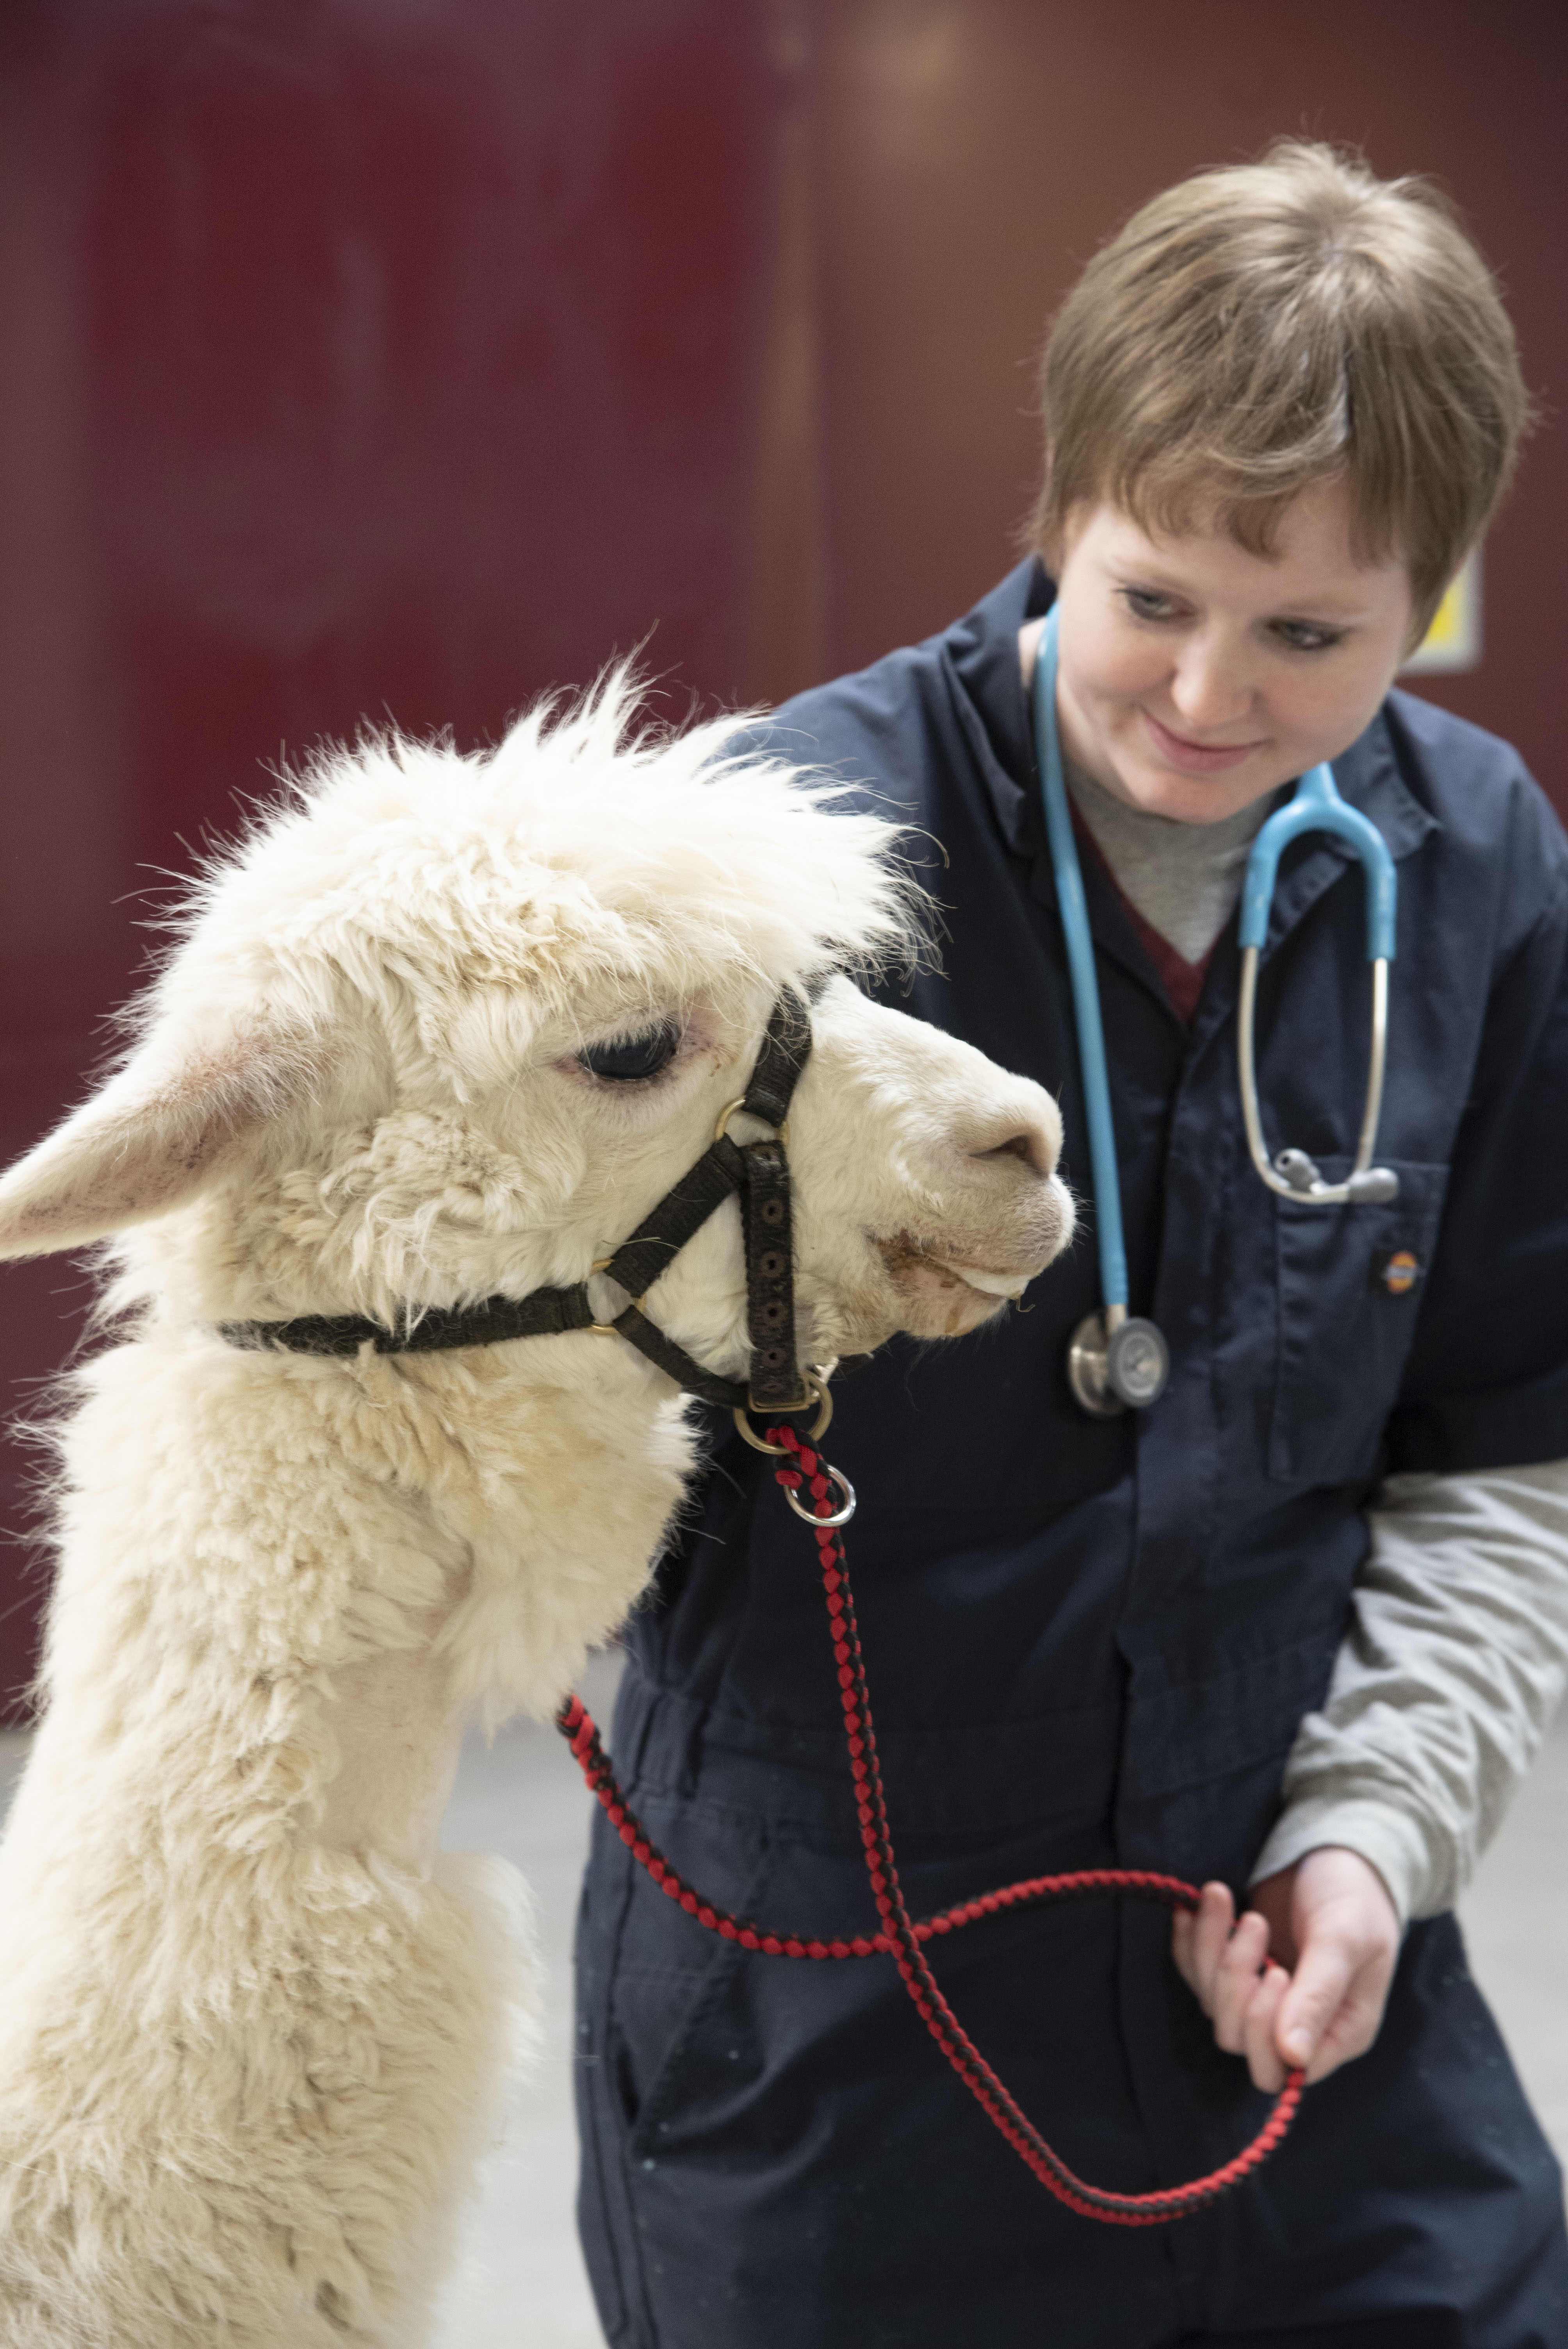 A veterinary student leads an alpaca